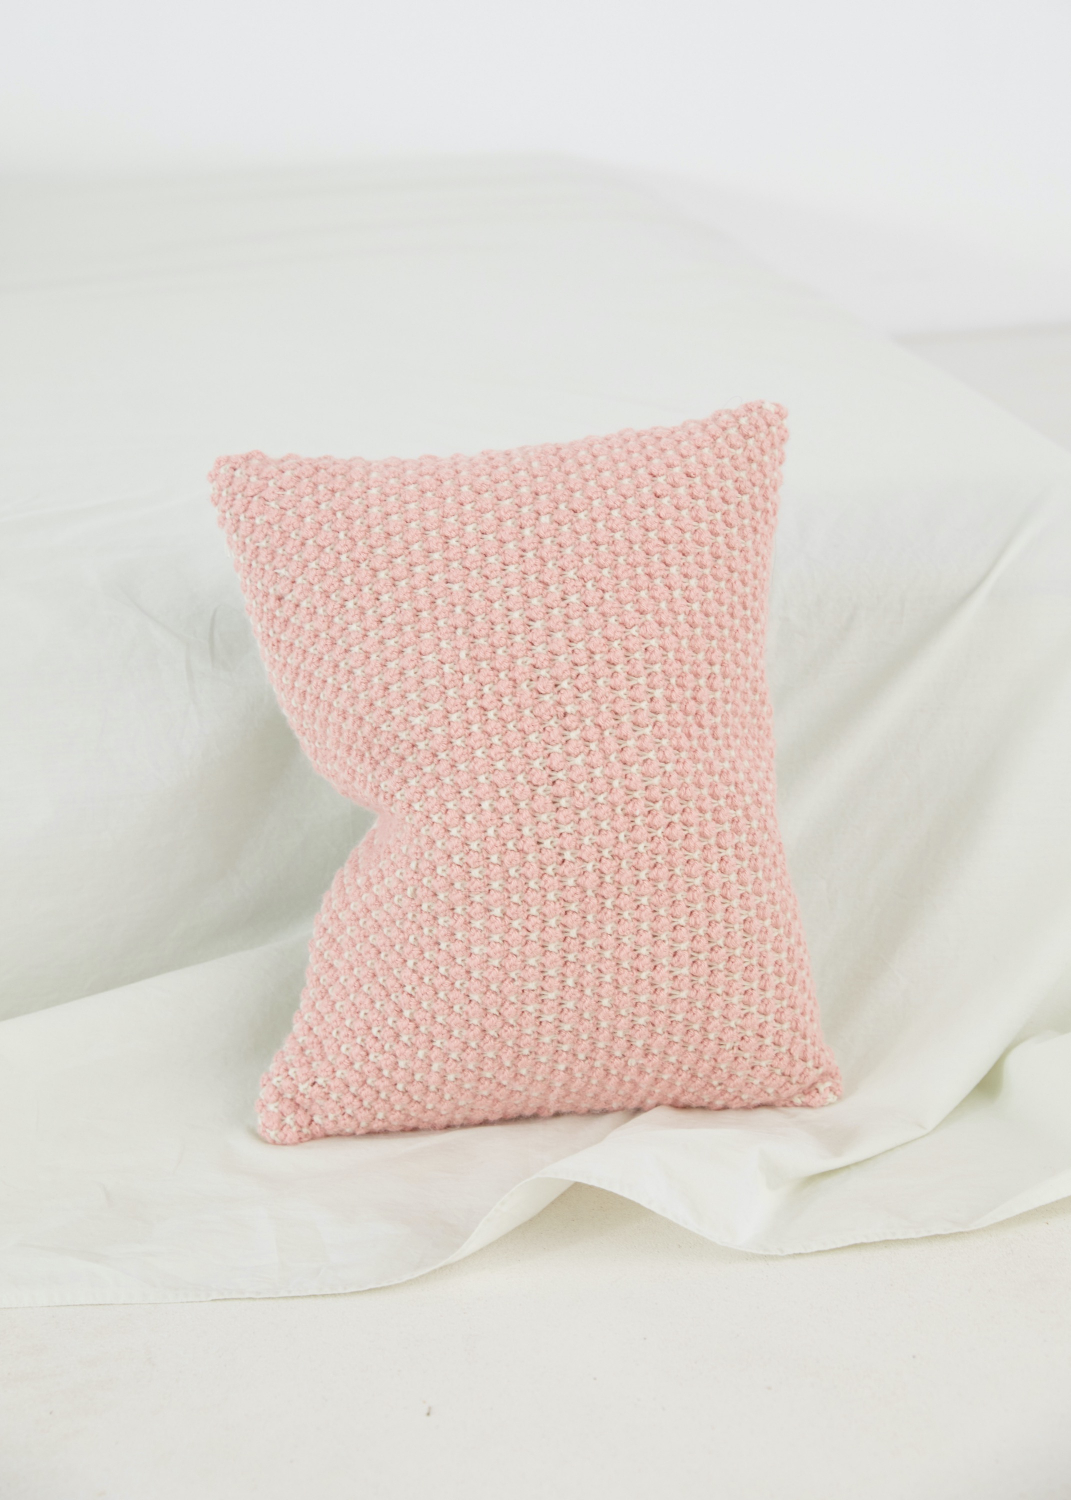 Cushions - Heather Classic pillow (30x40) Thumbnail